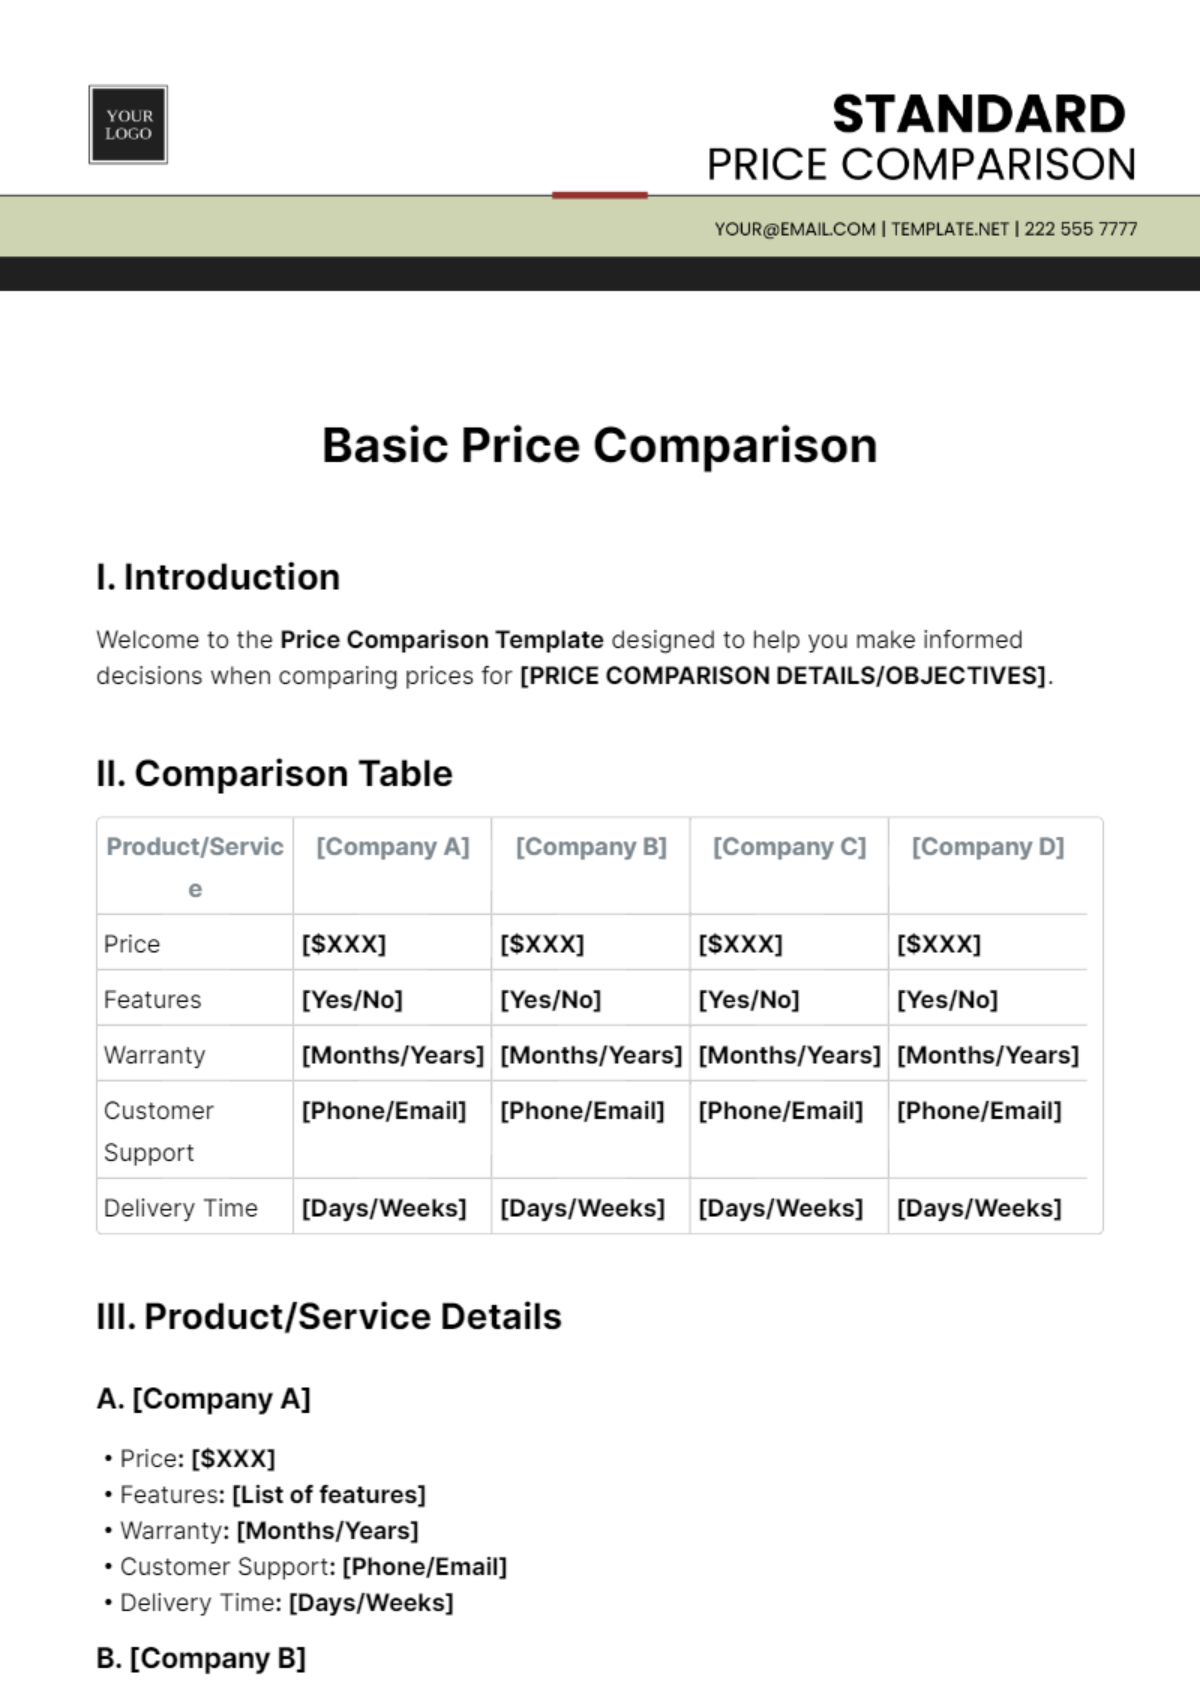 Basic Price Comparison Template